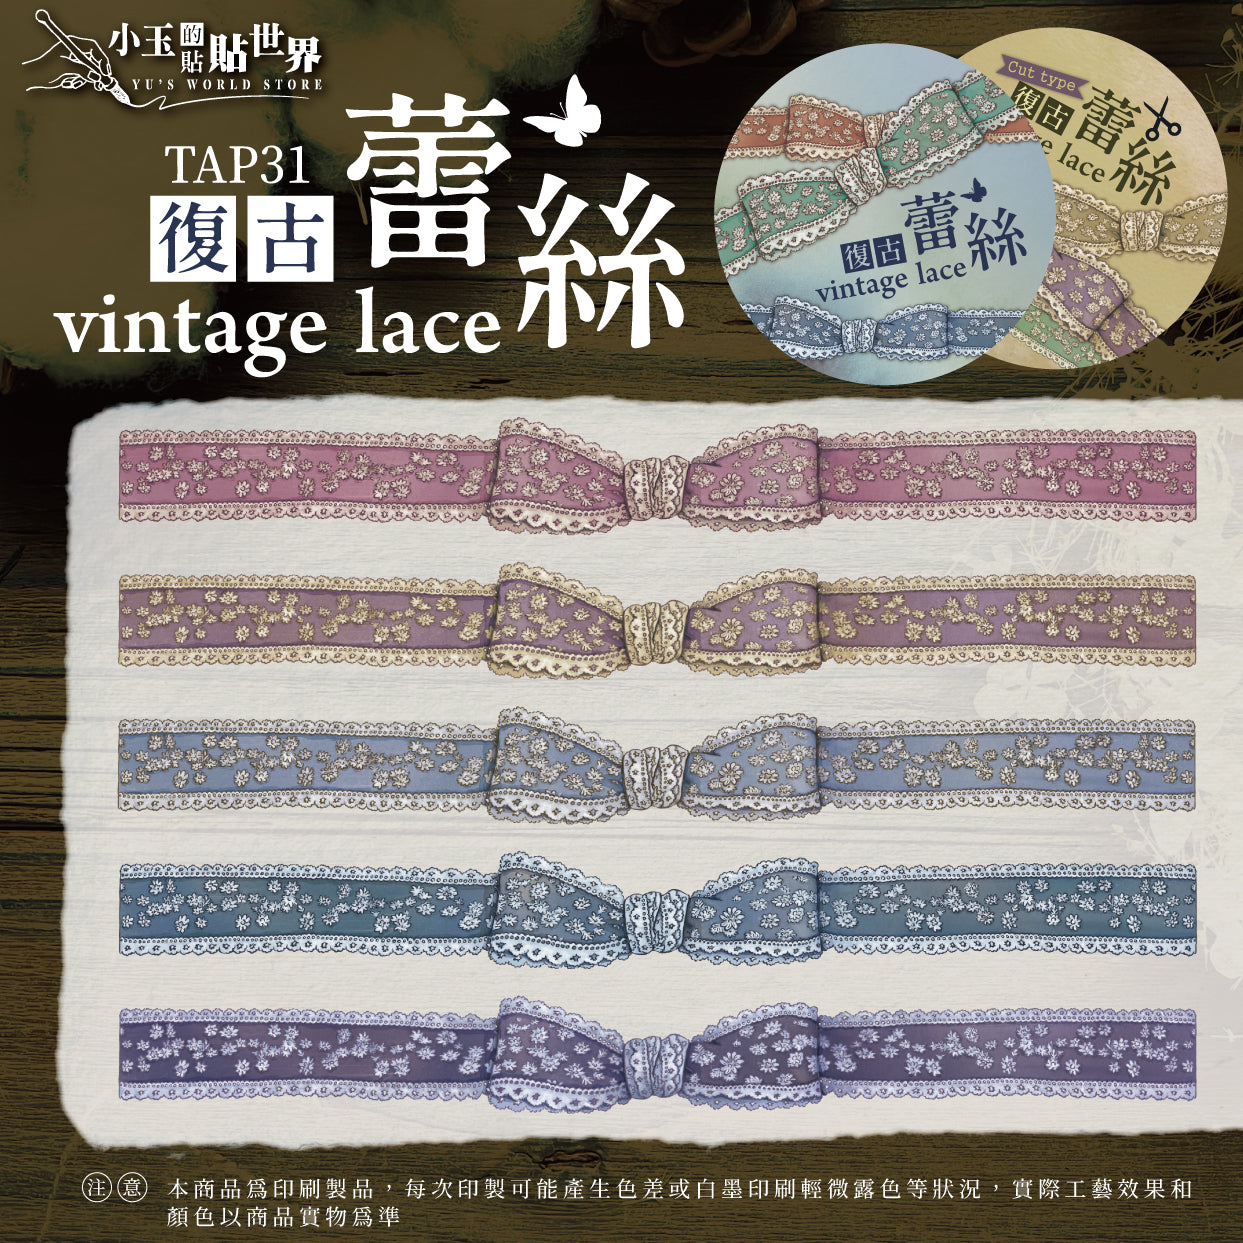 yusworld tap31-vintage-lace pet tape